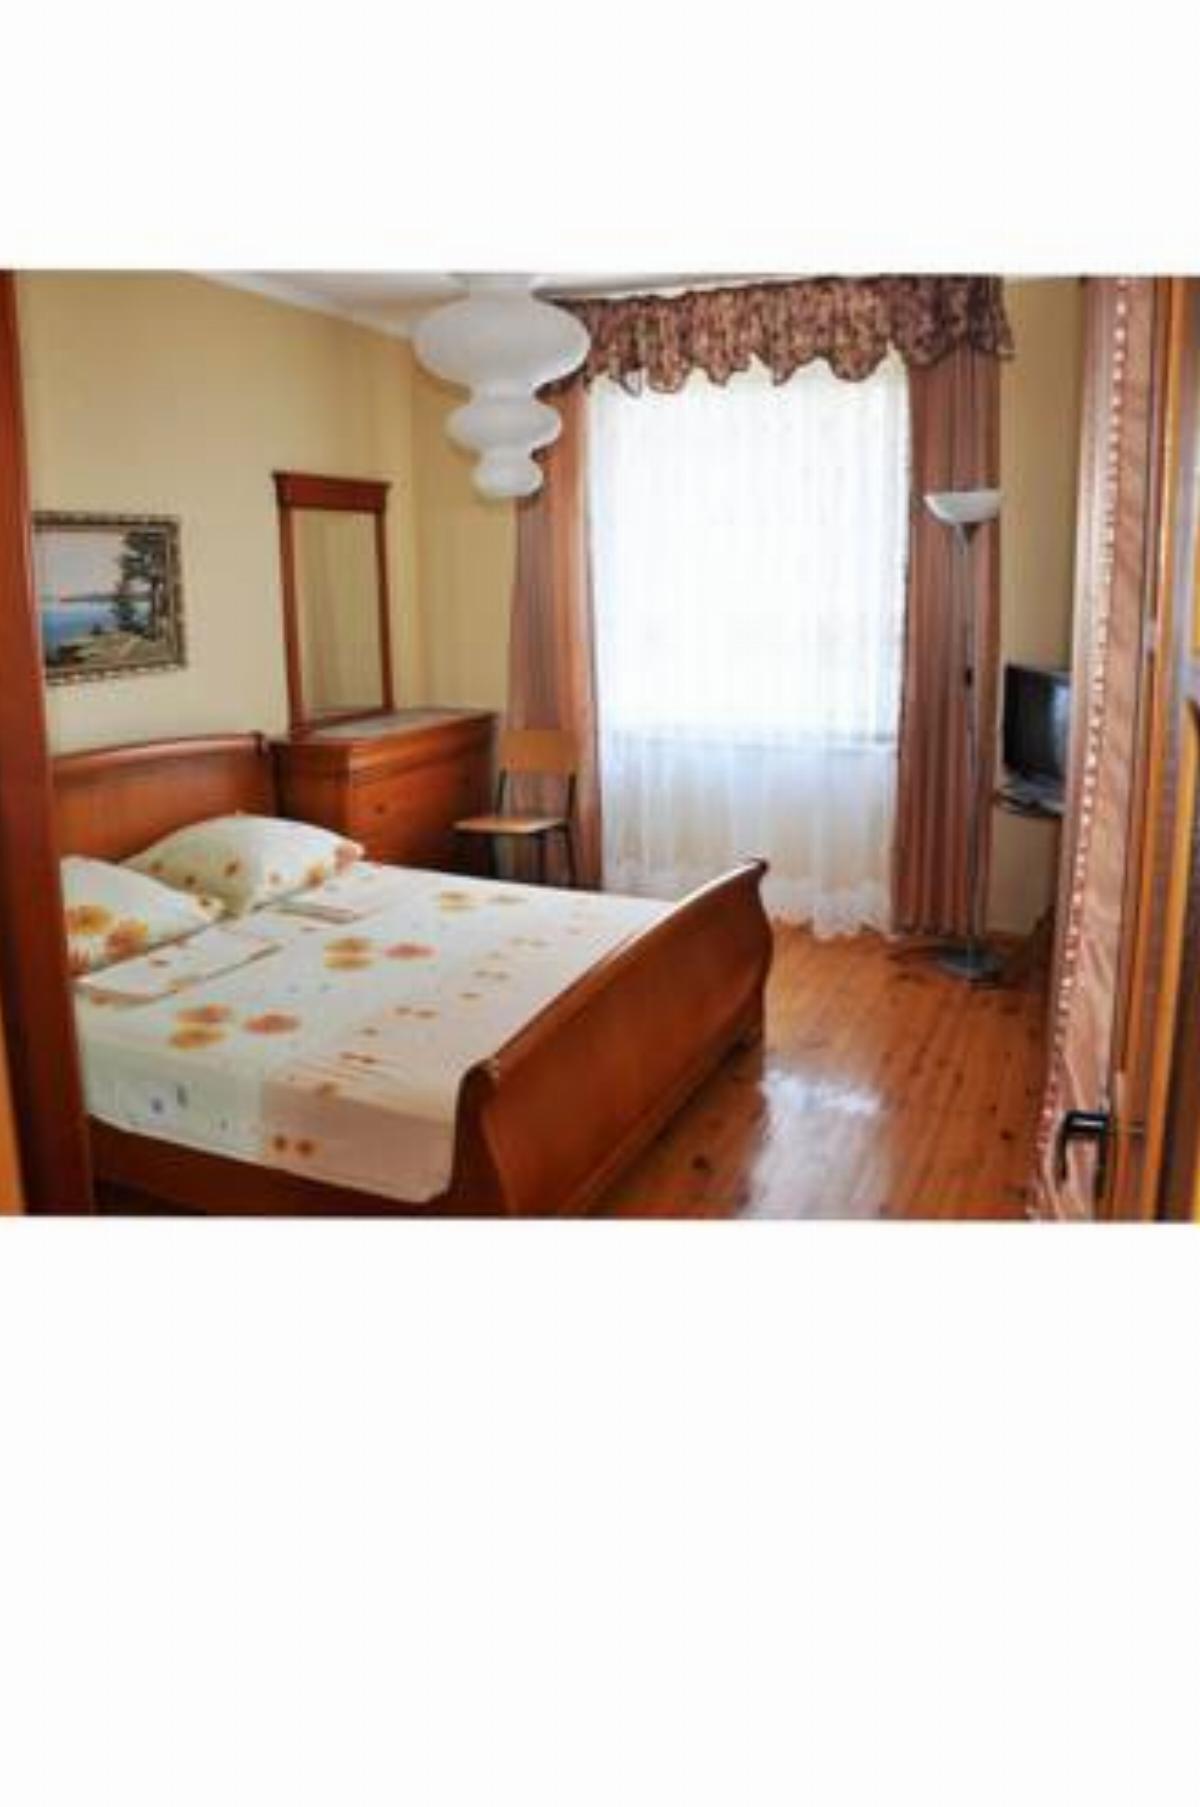 Guesthouse Serova 3 Hotel Koktebel Crimea